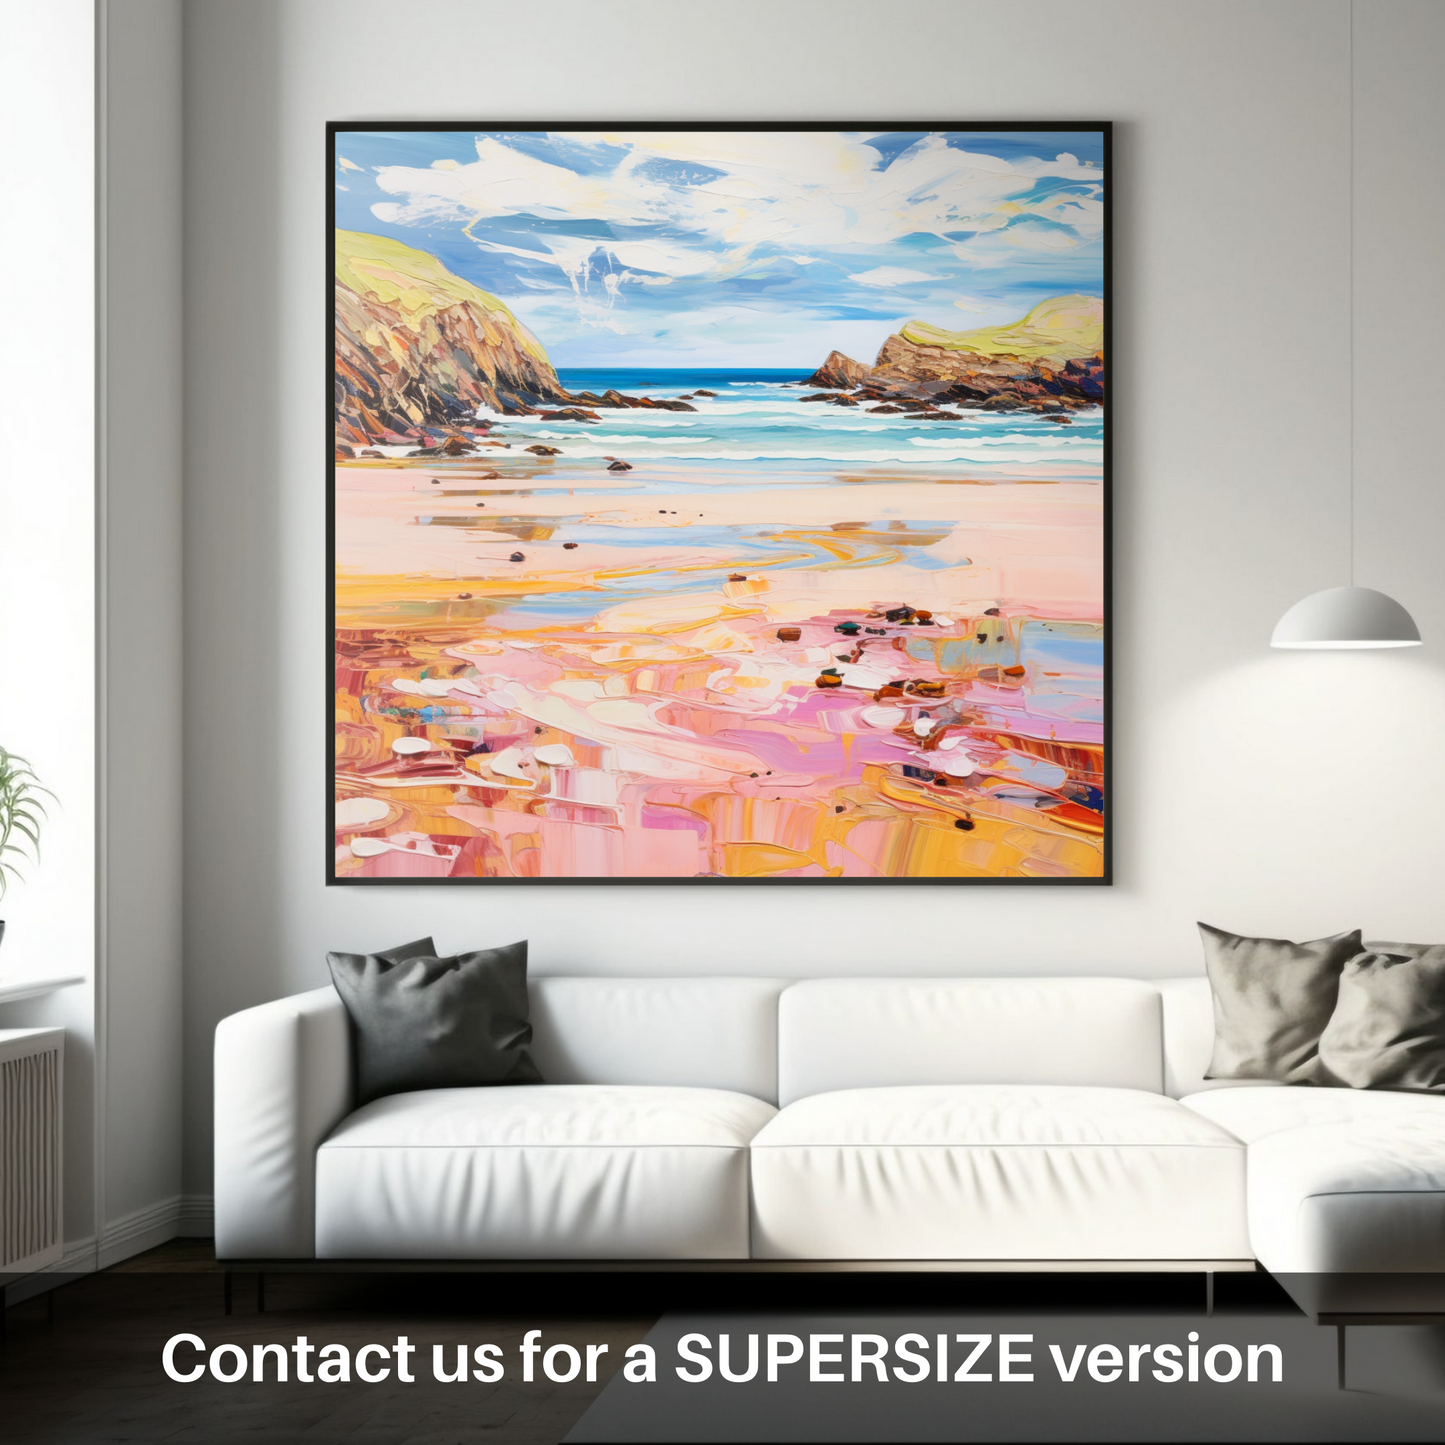 Huge supersize print of Durness Beach, Sutherland in summer